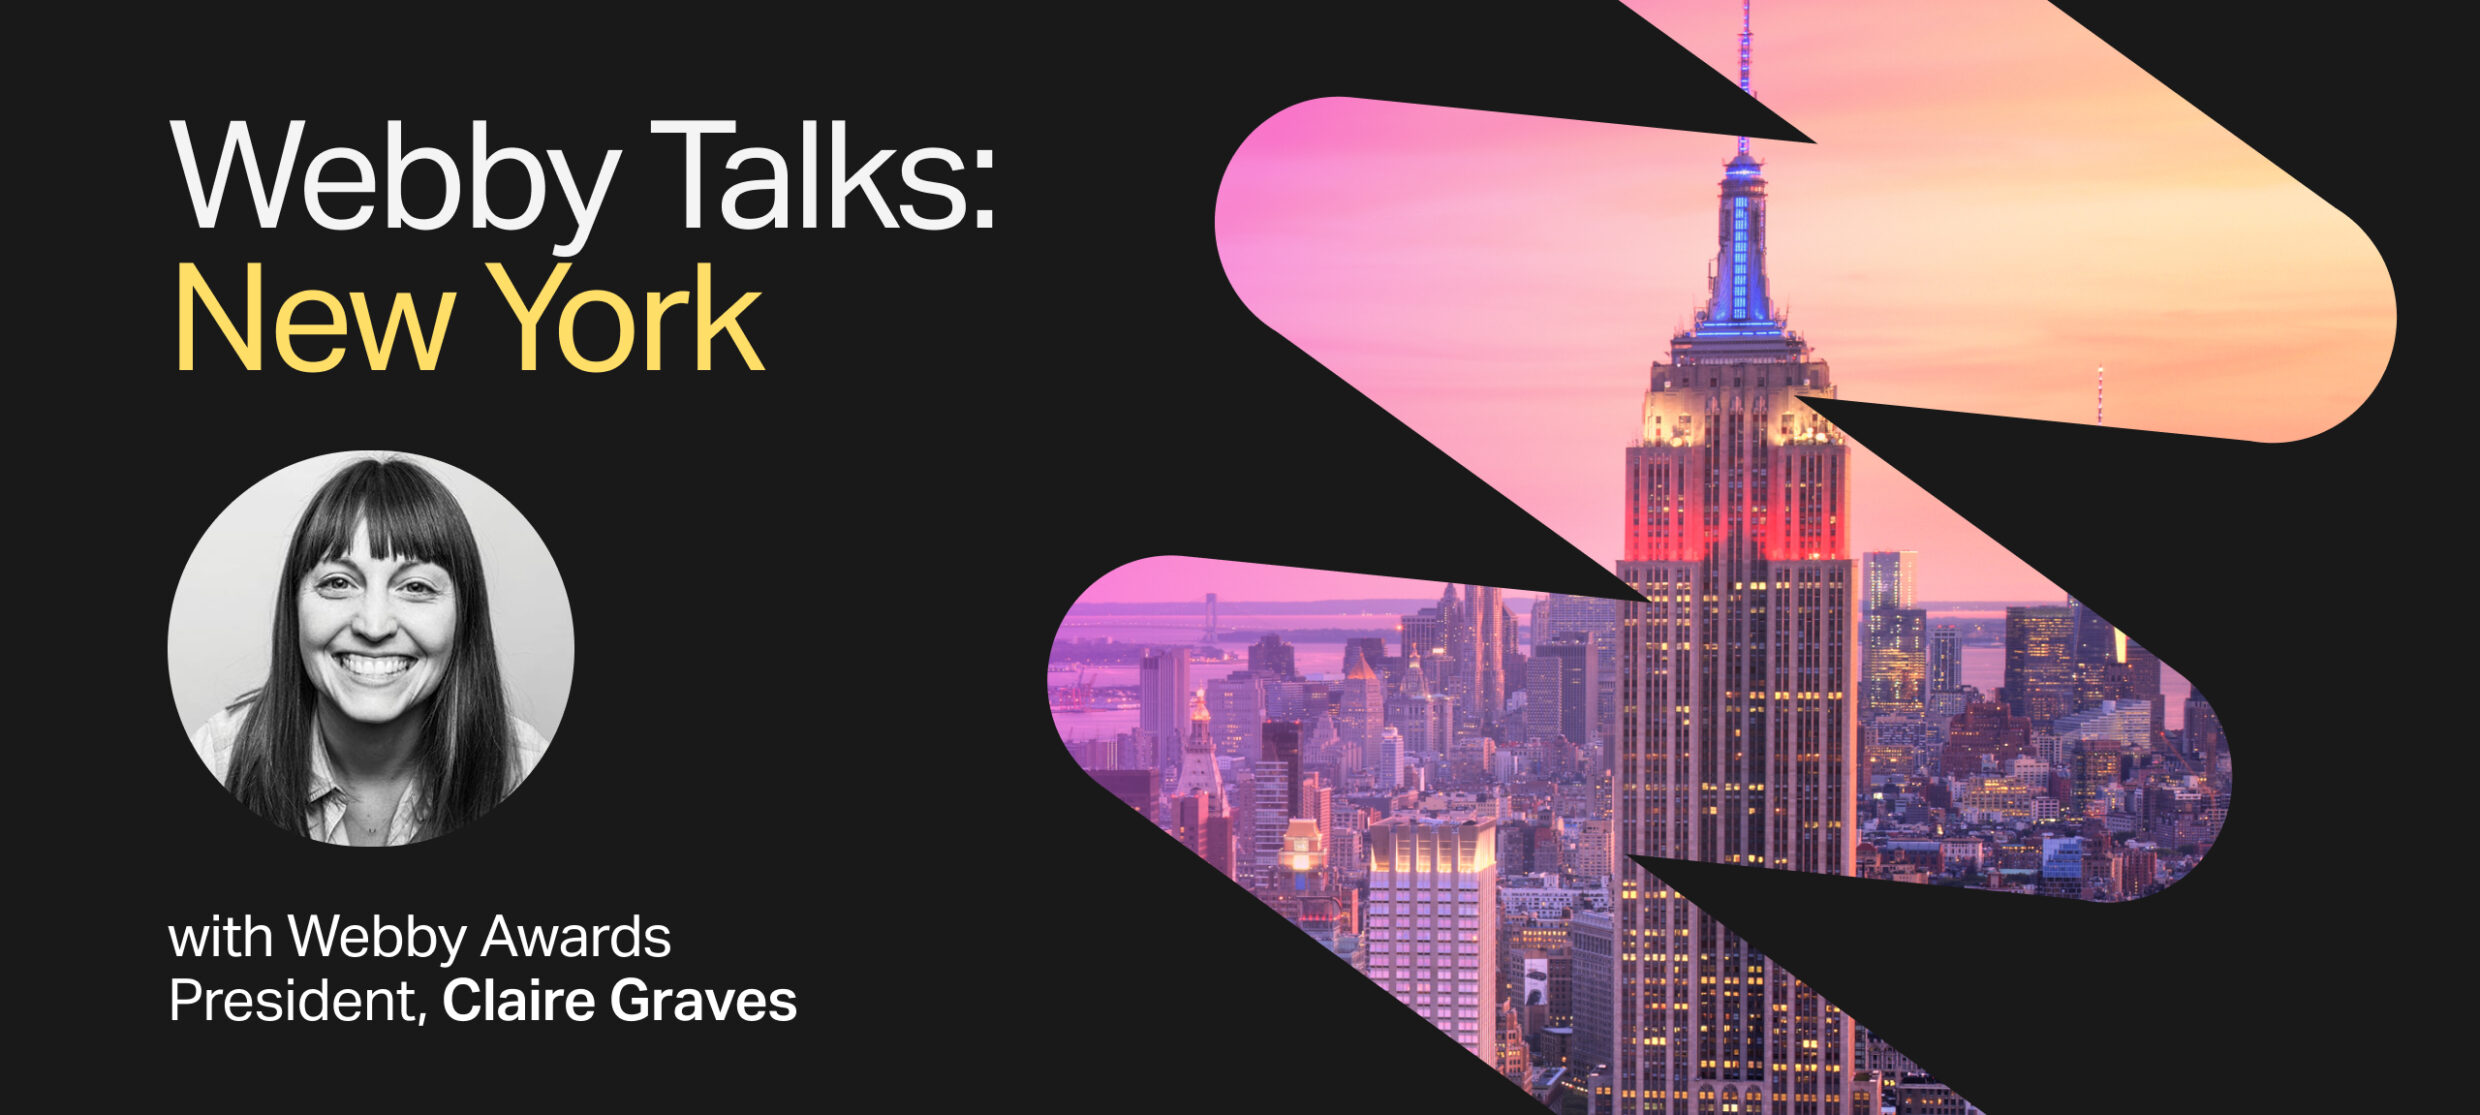 New York: Webby Talk Community Event 